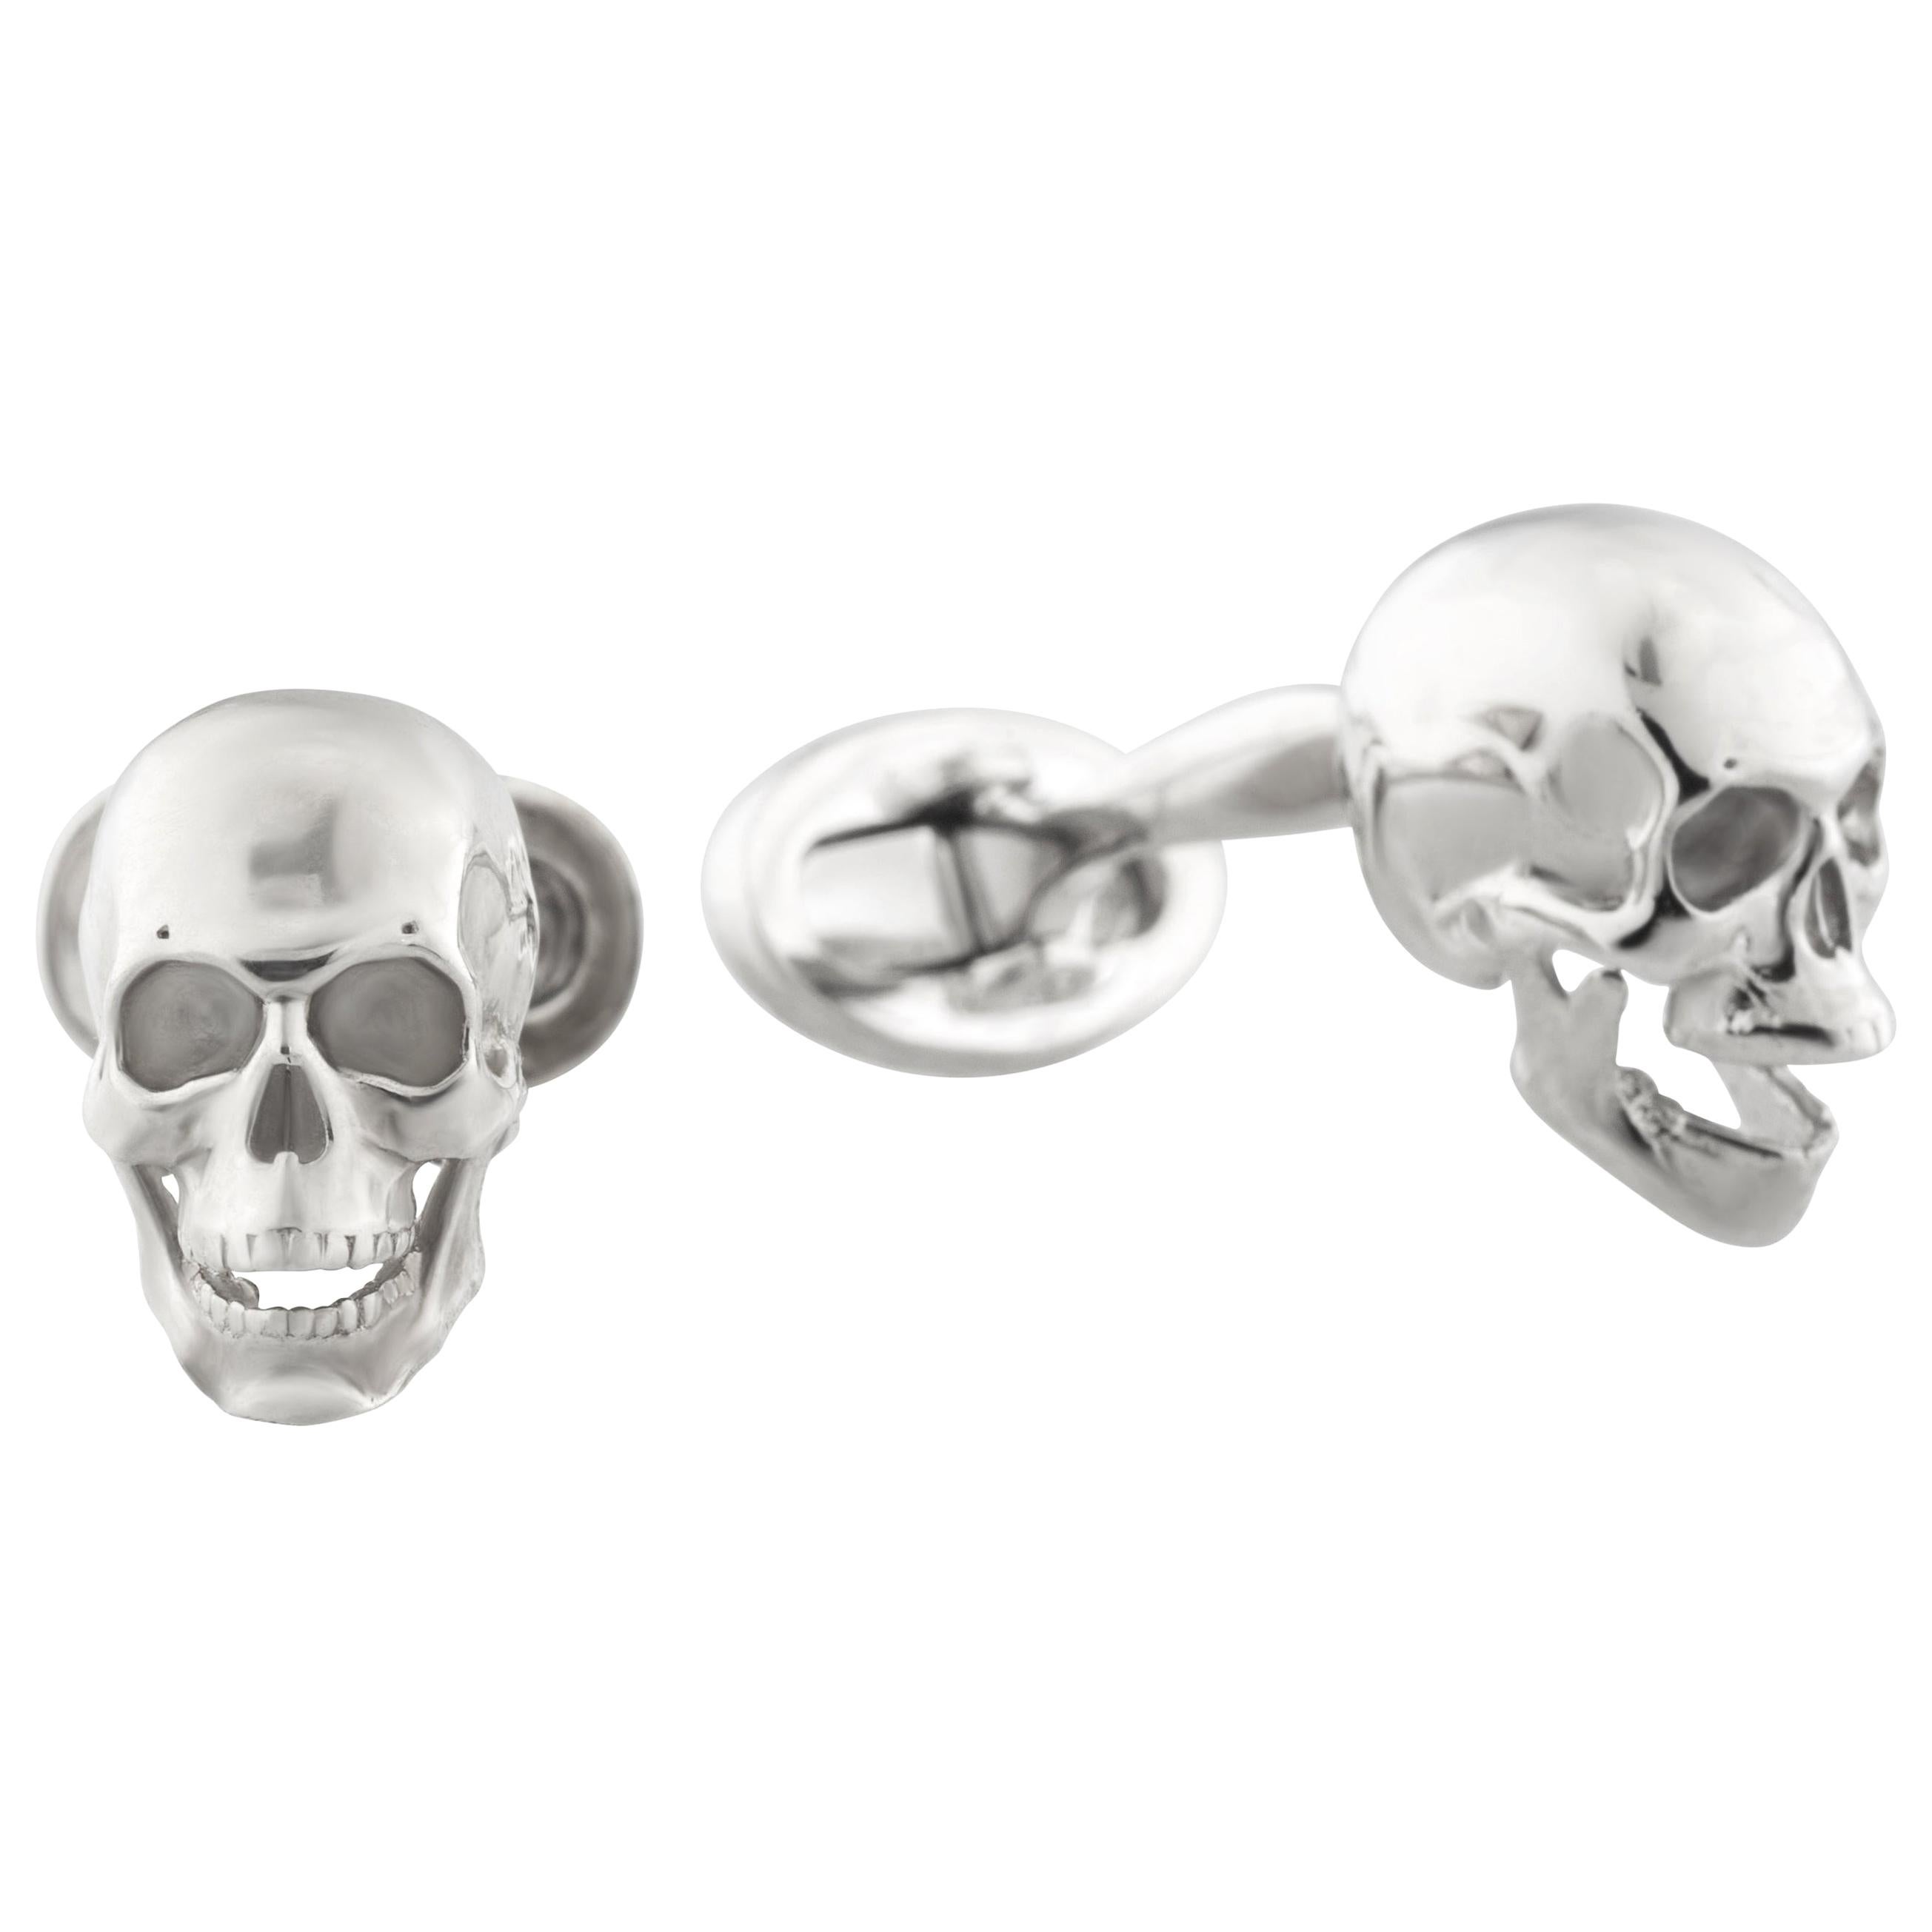 "Poor Yorick" Skull Handmade Cufflinks in Sterling Silver  by Fils Unique